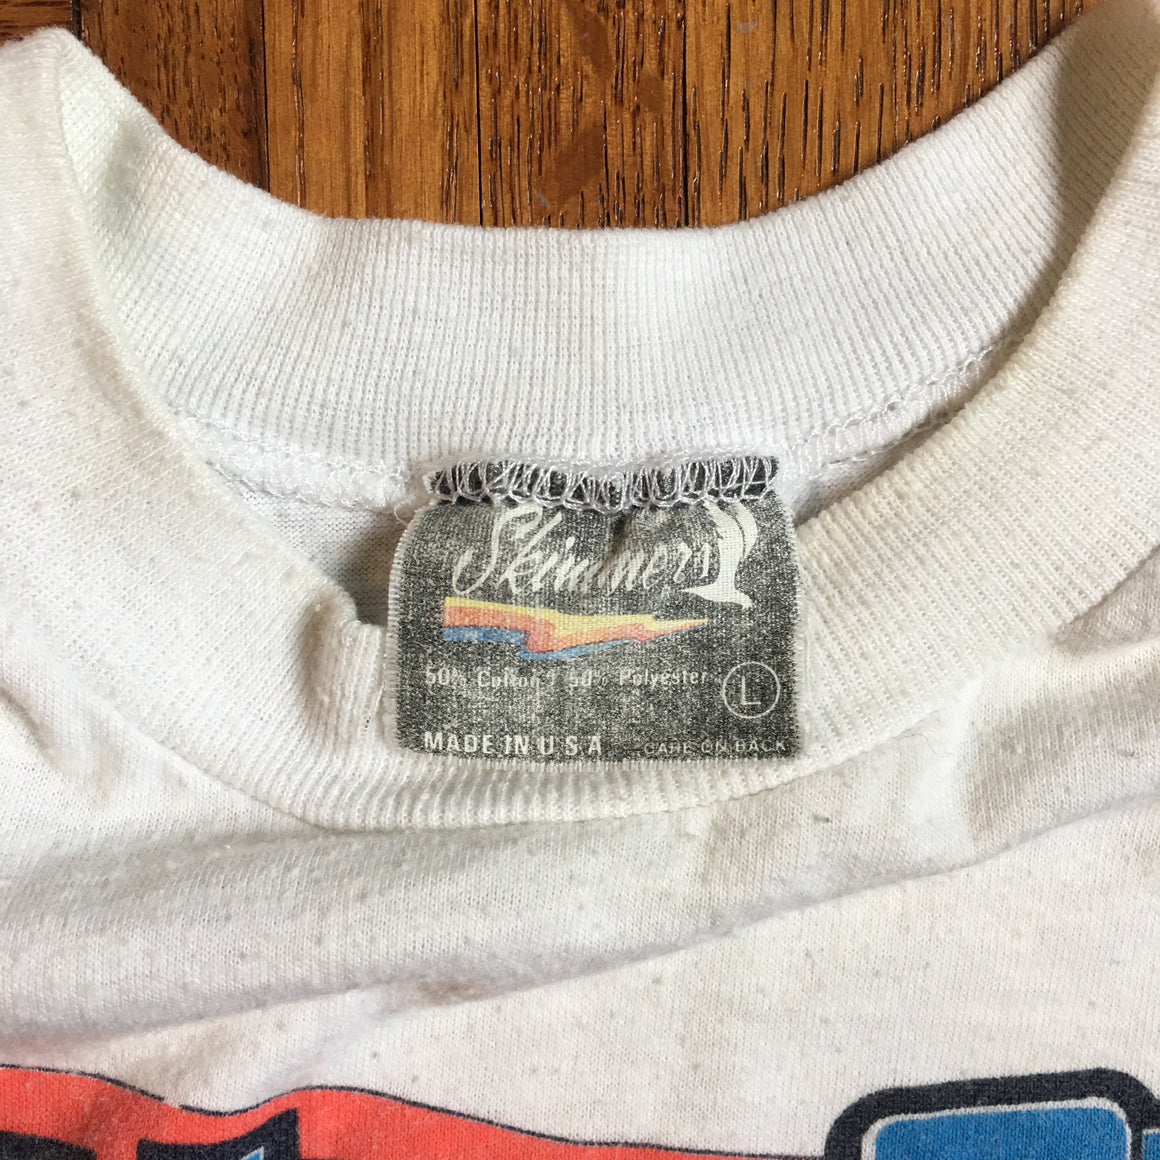 Penn State 1986 National Champs shirt - M / L